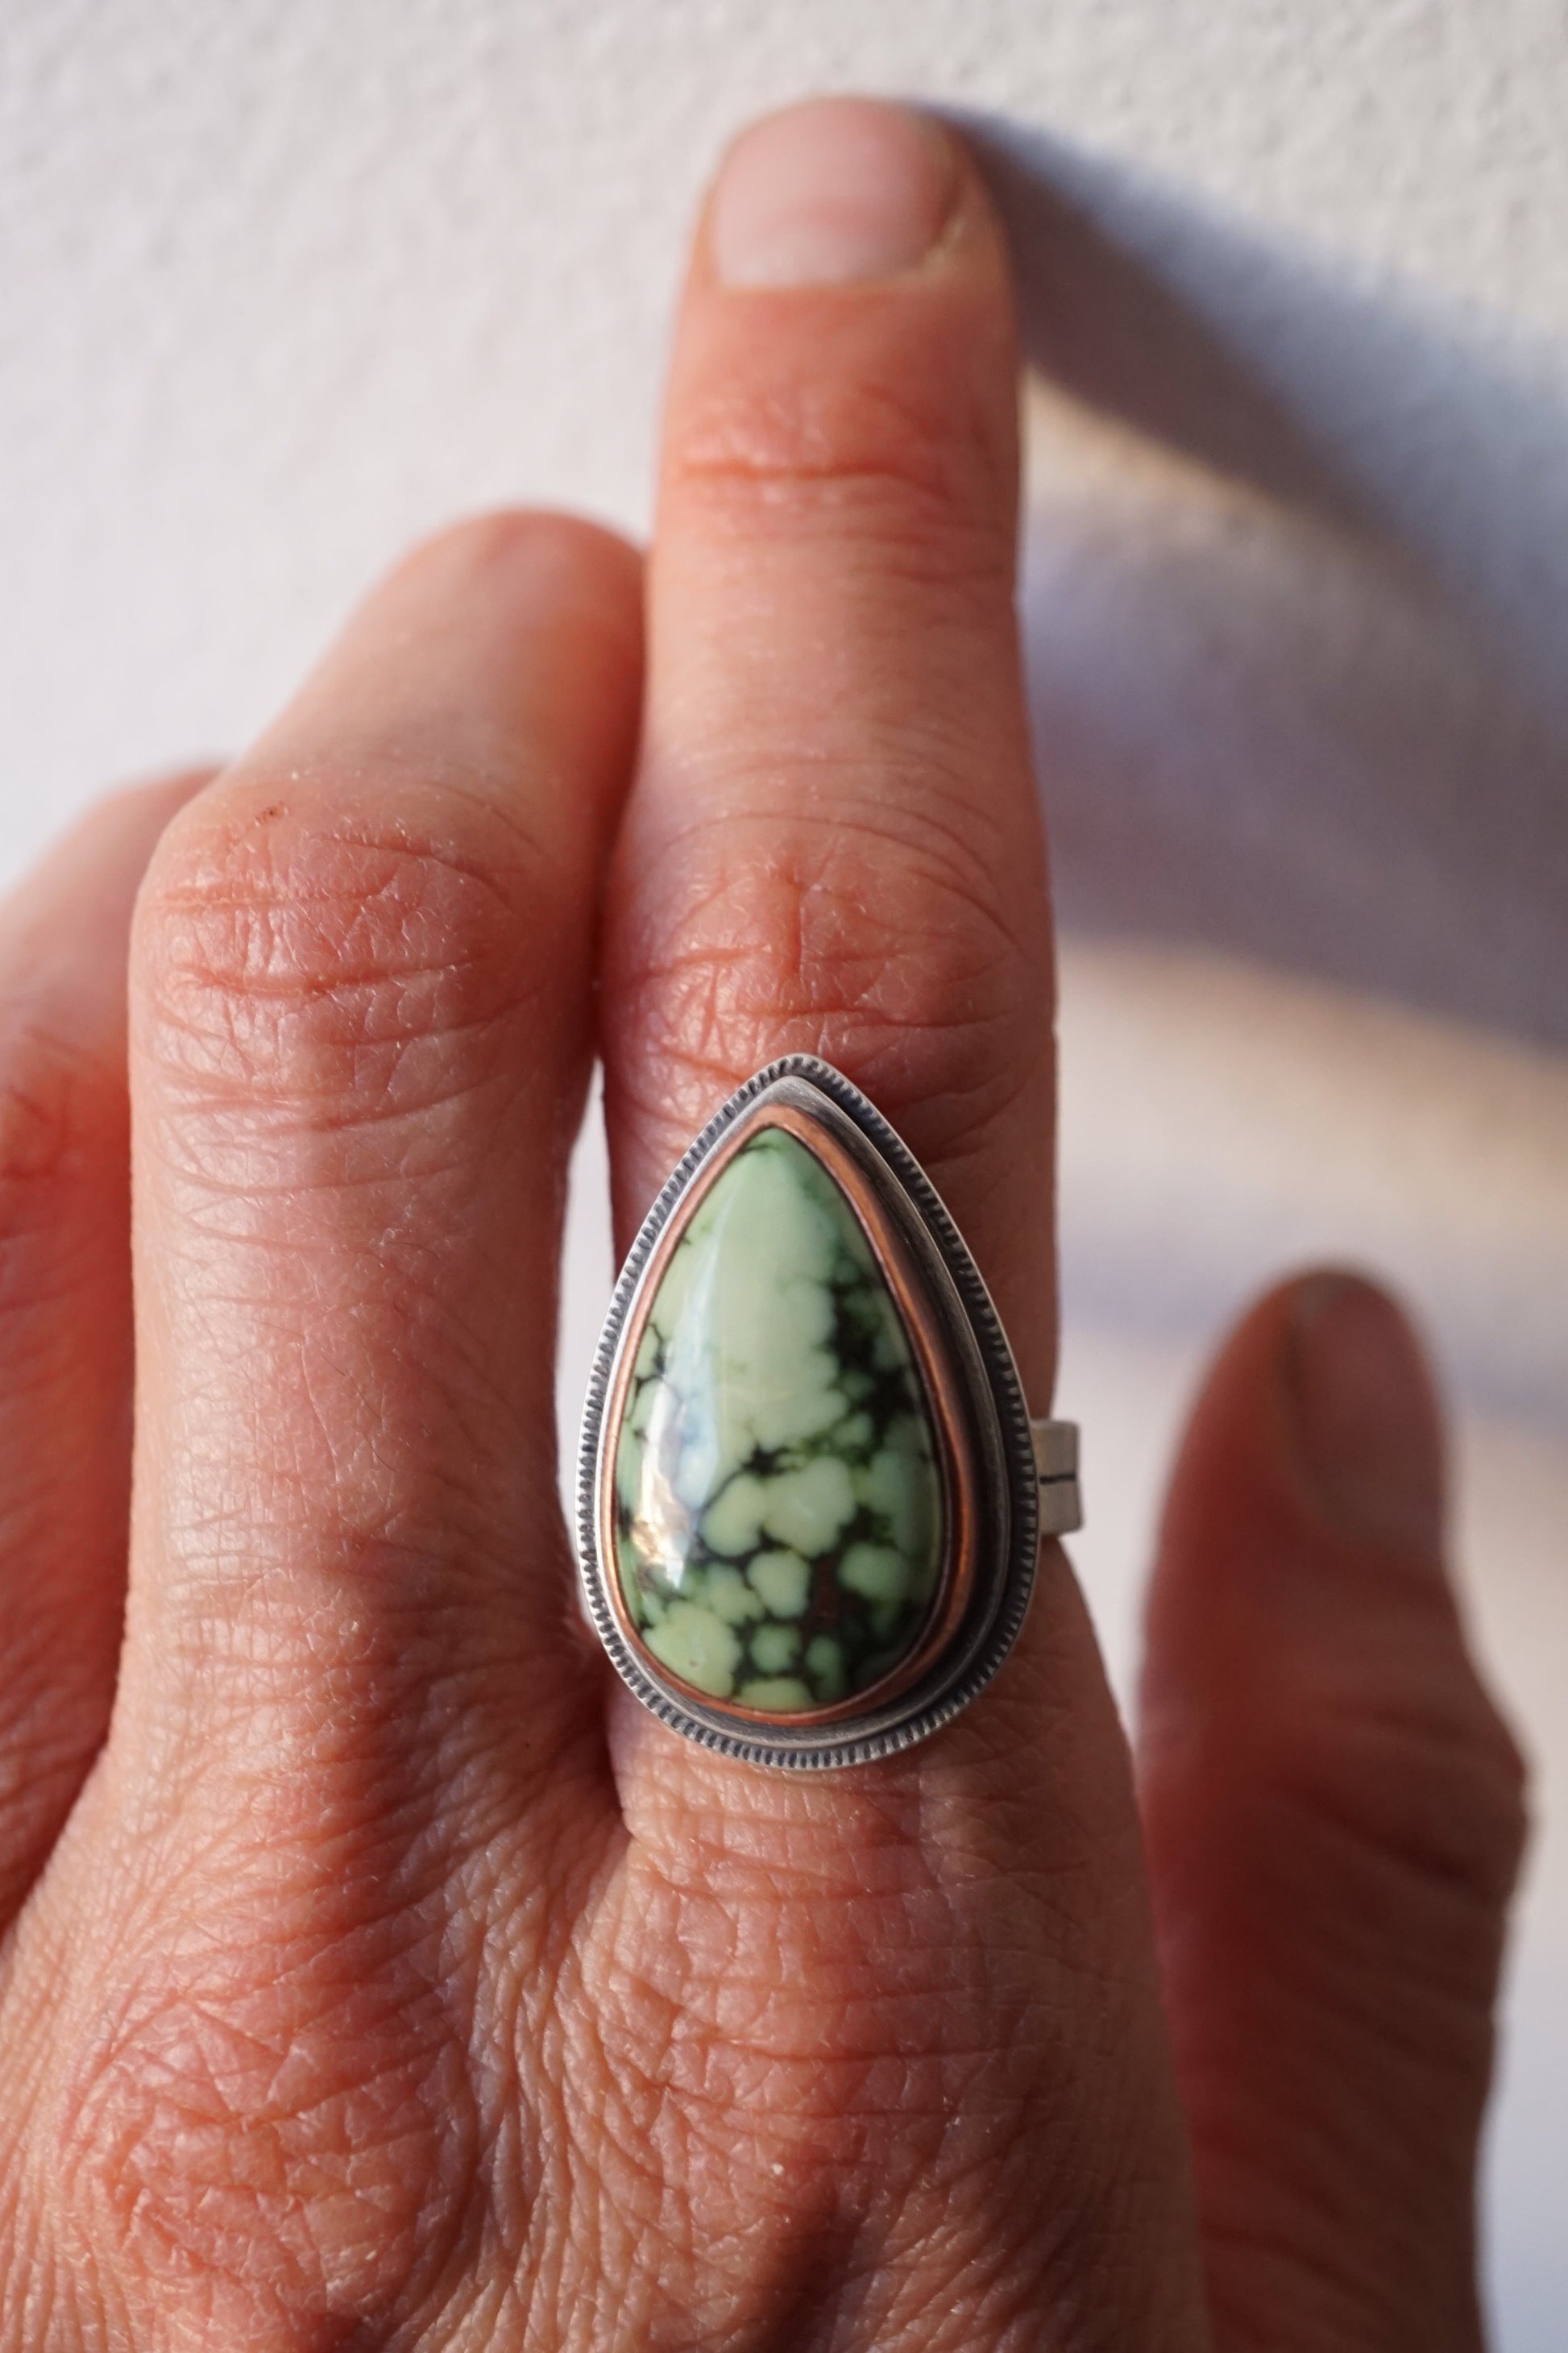 hubei turquoise ring with copper bezel - size 6 - Lumenrose